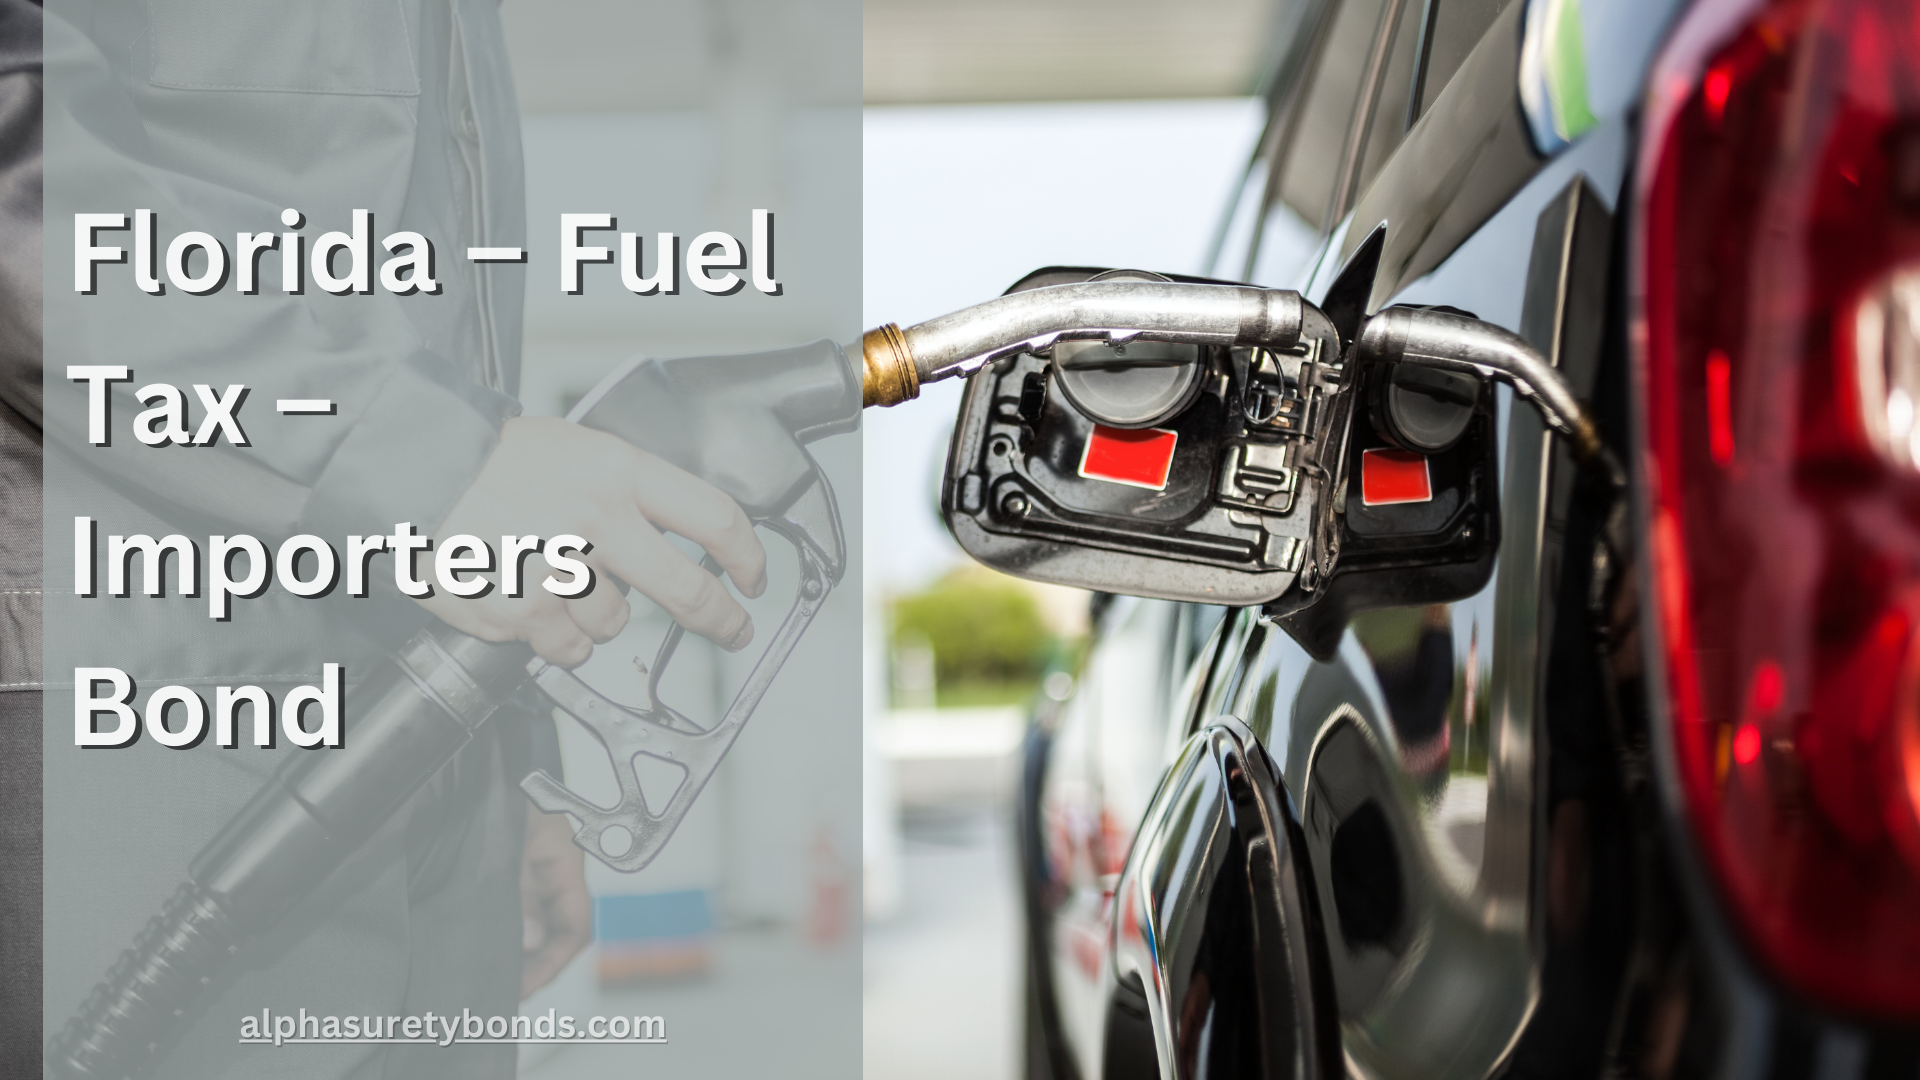 Florida – Fuel Tax – Importers Bond